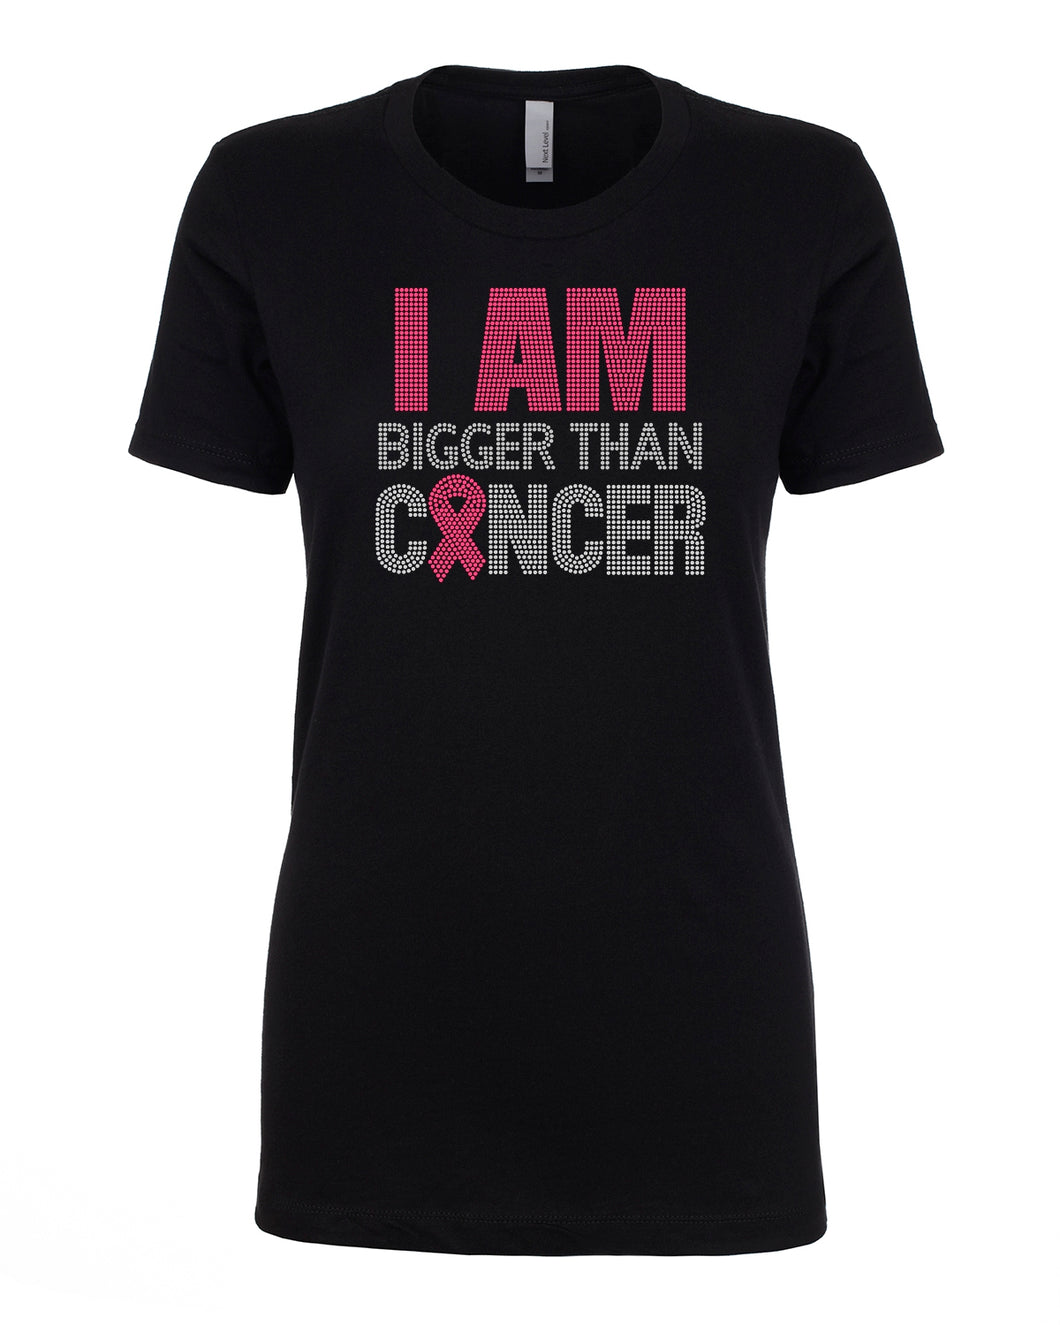 Awareness - I AM Bigger than Cancer